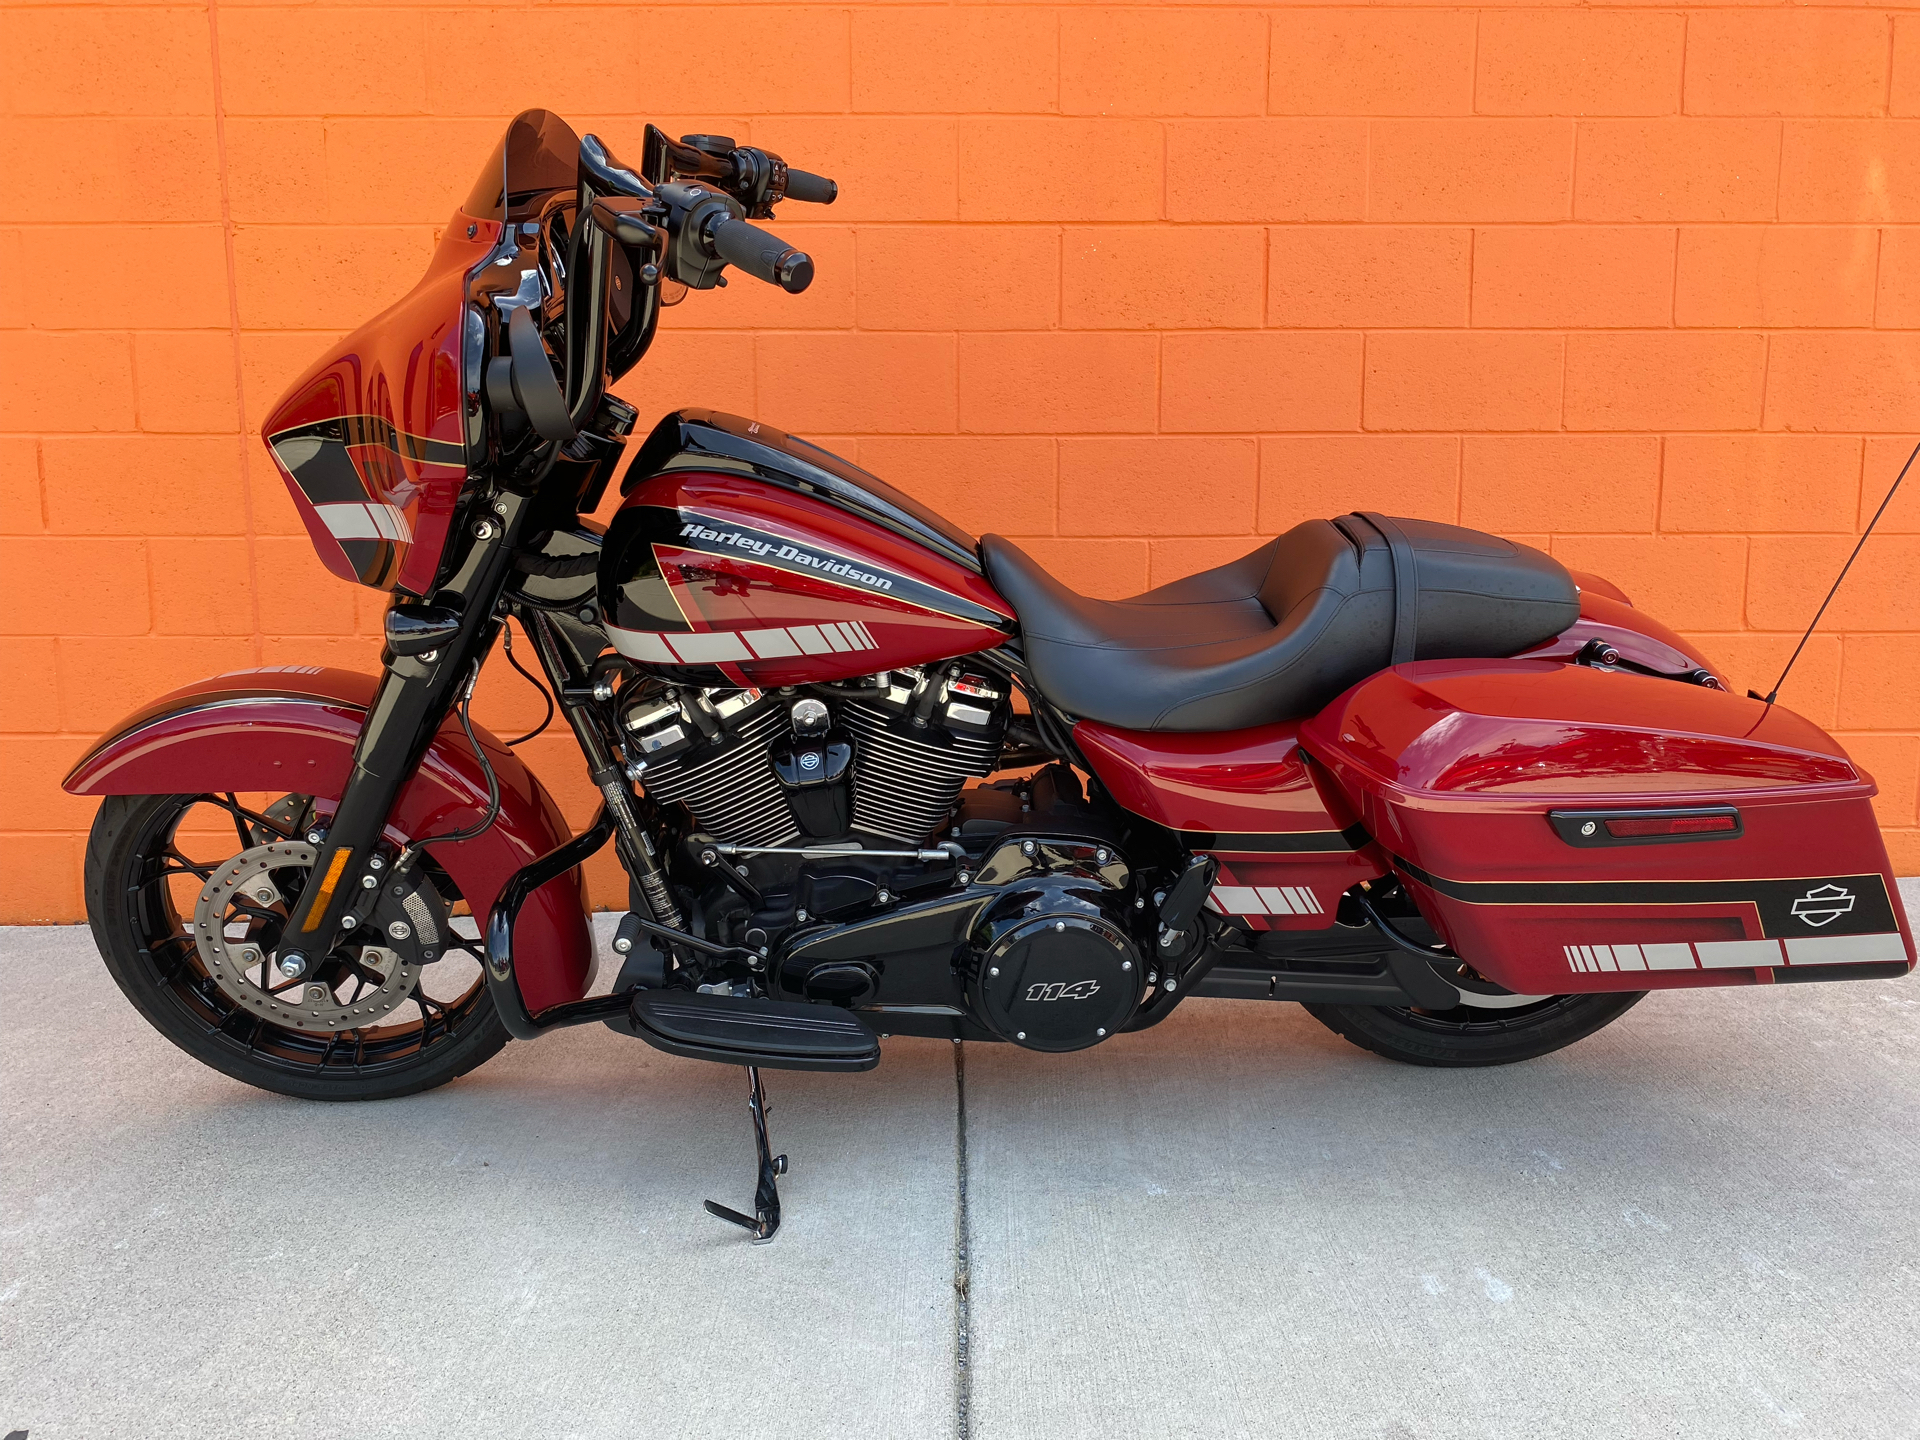 2021 Harley-Davidson Street Glide® Special in Fredericksburg, Virginia - Photo 2